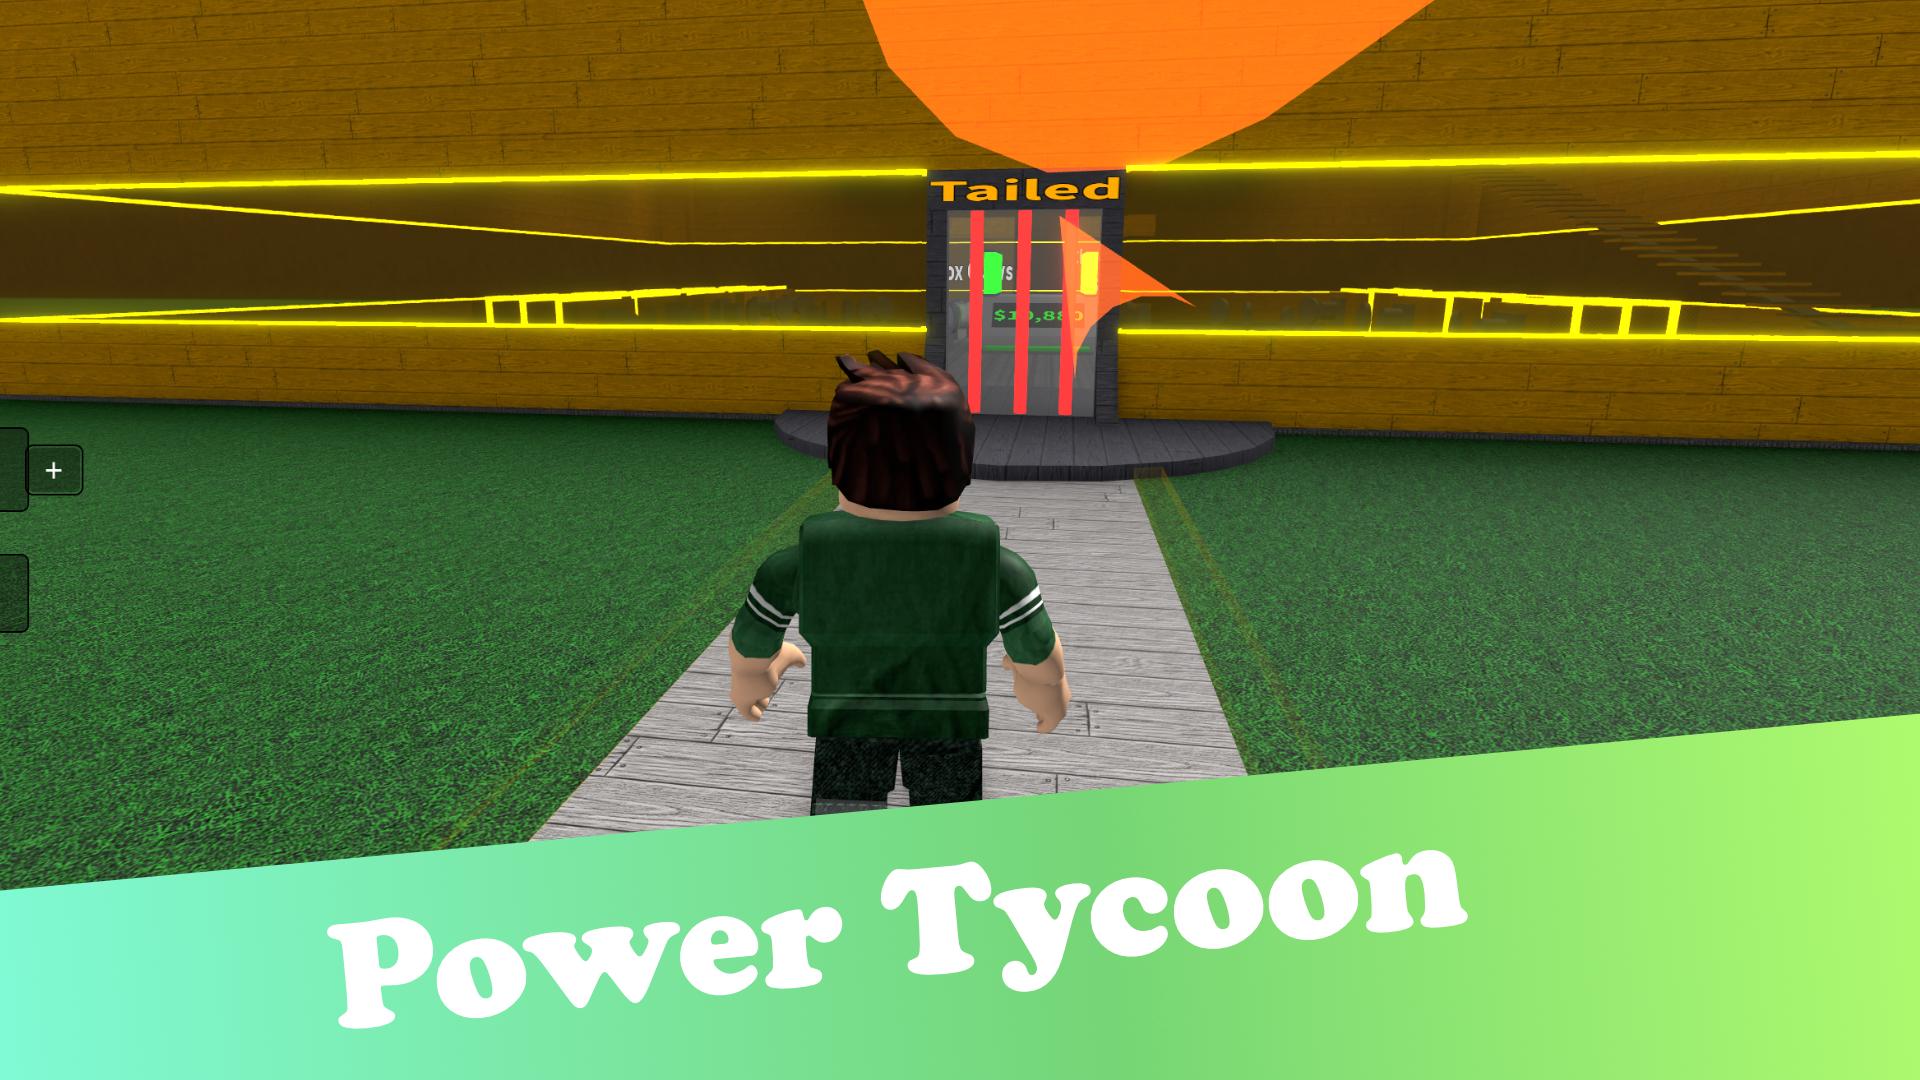 Tycoon power